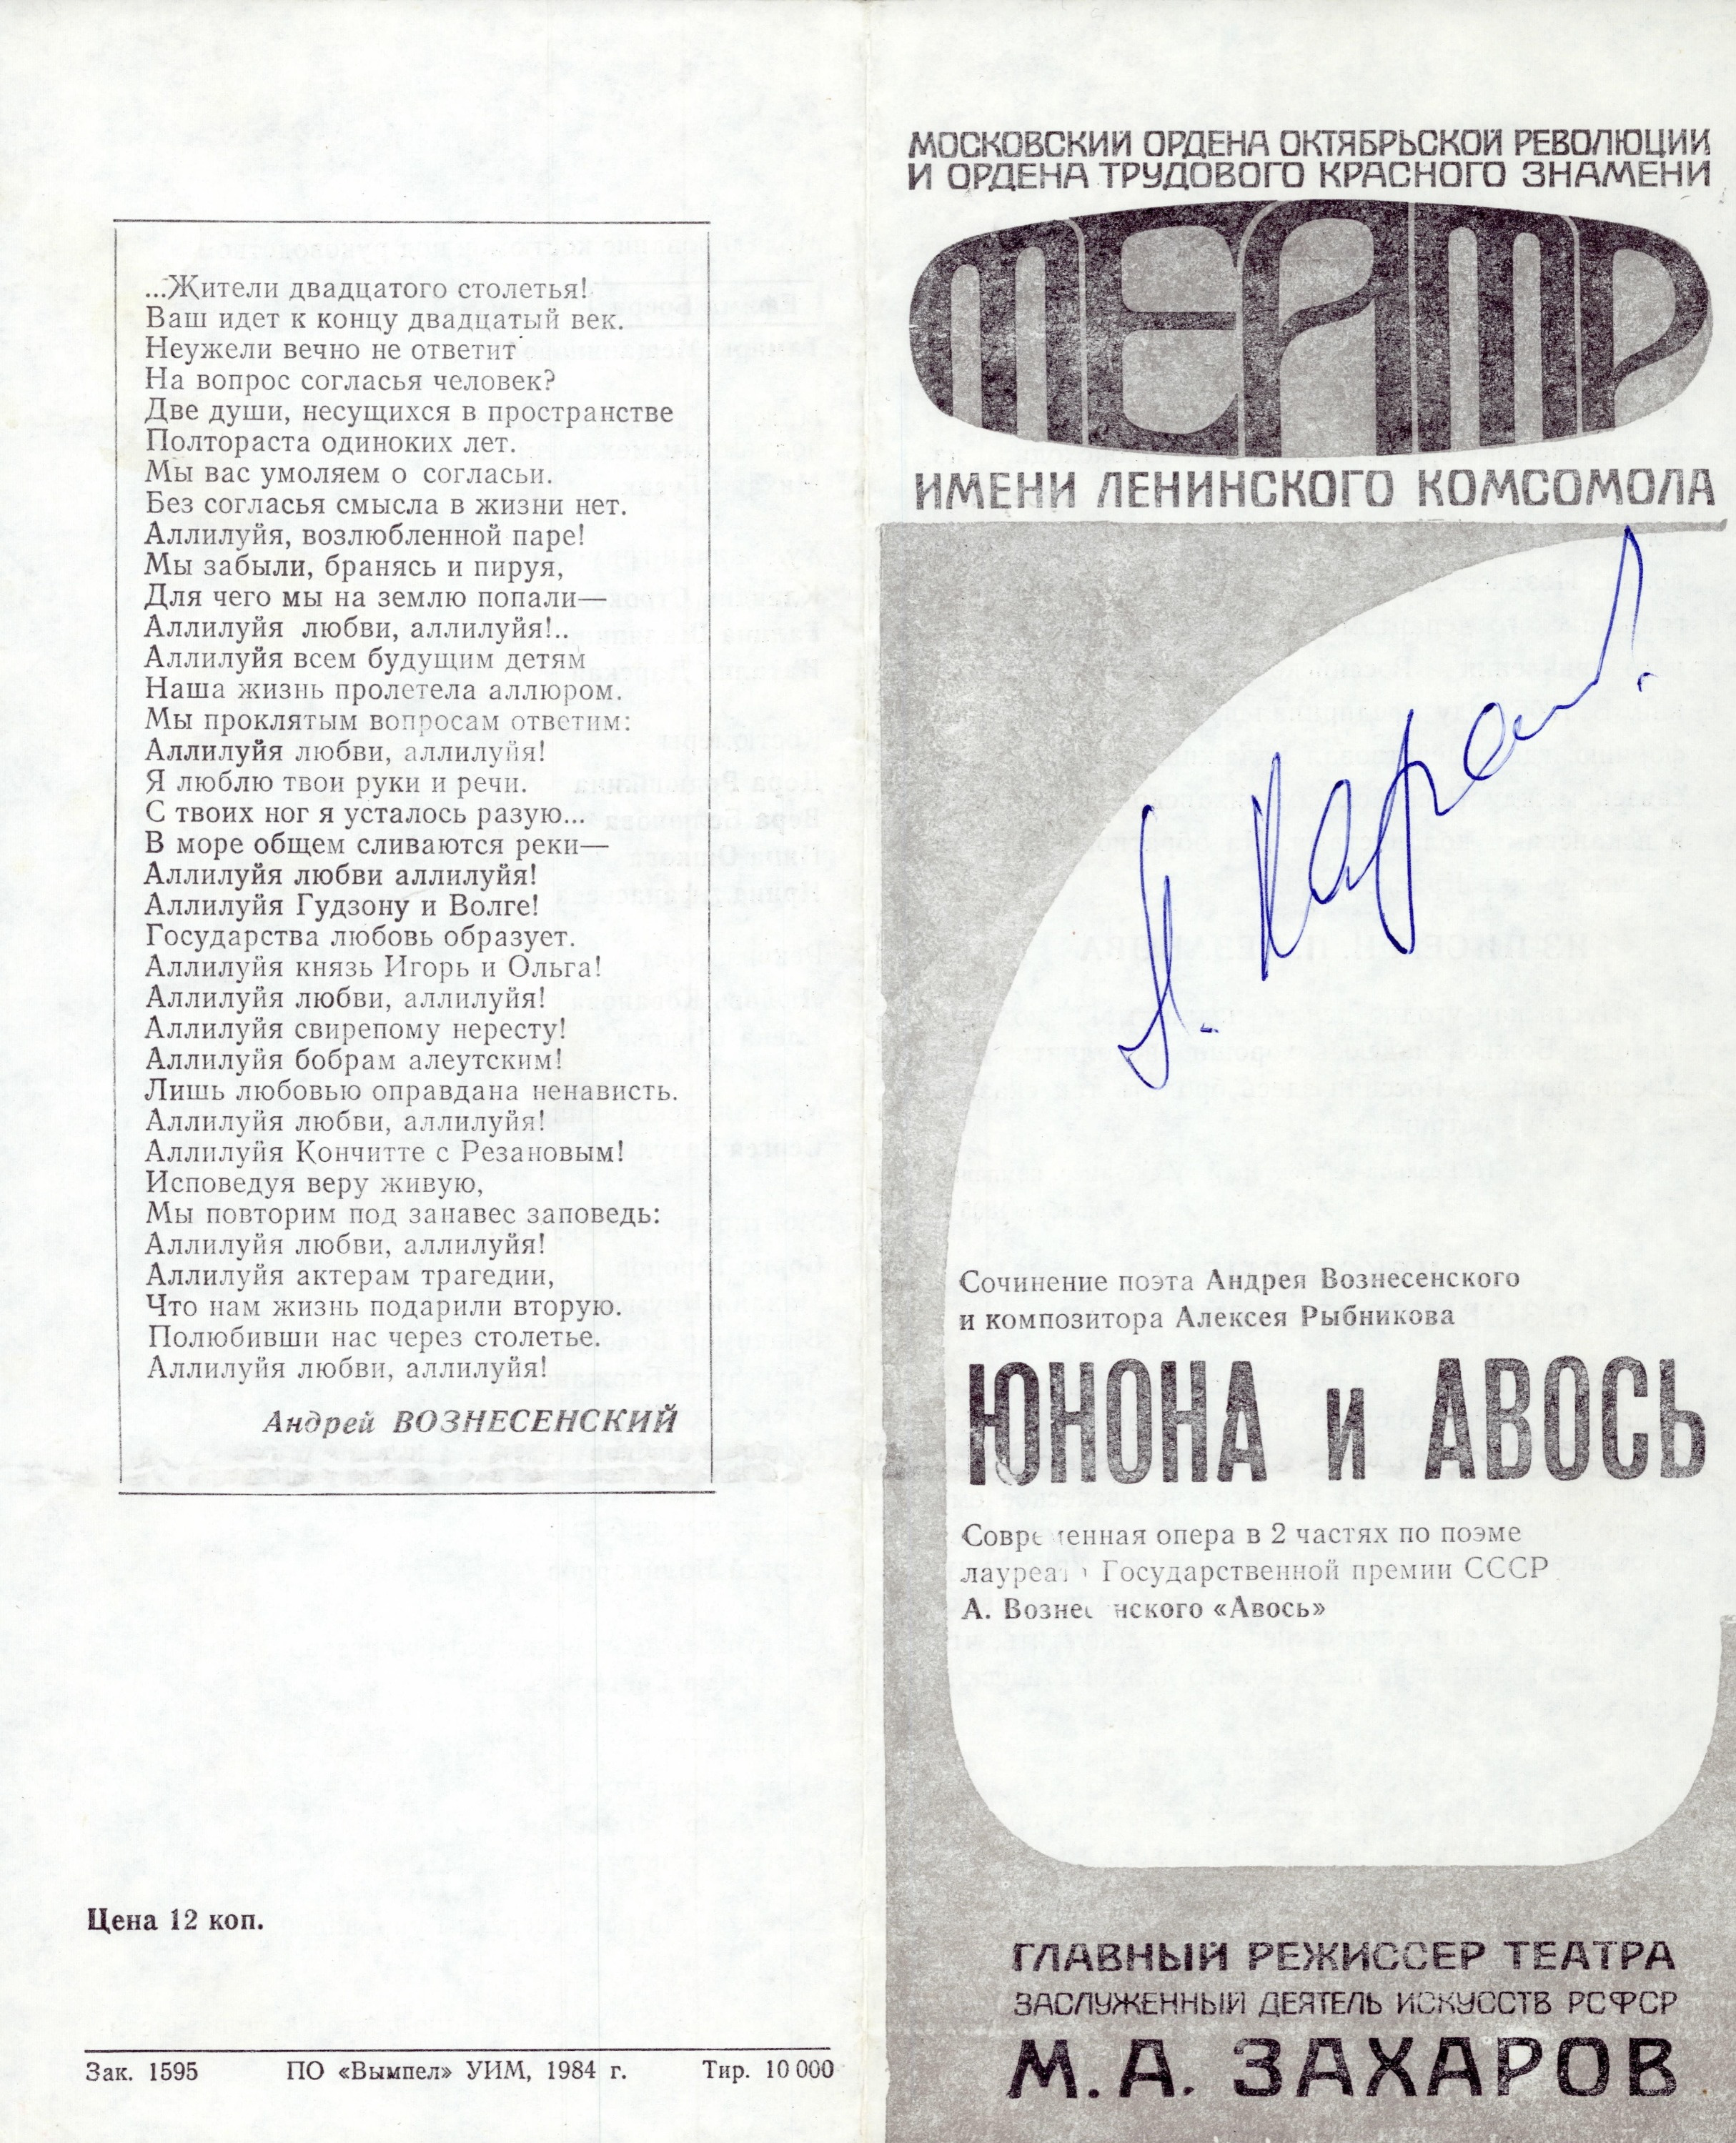 Автограф Караченцова на программе спектакля